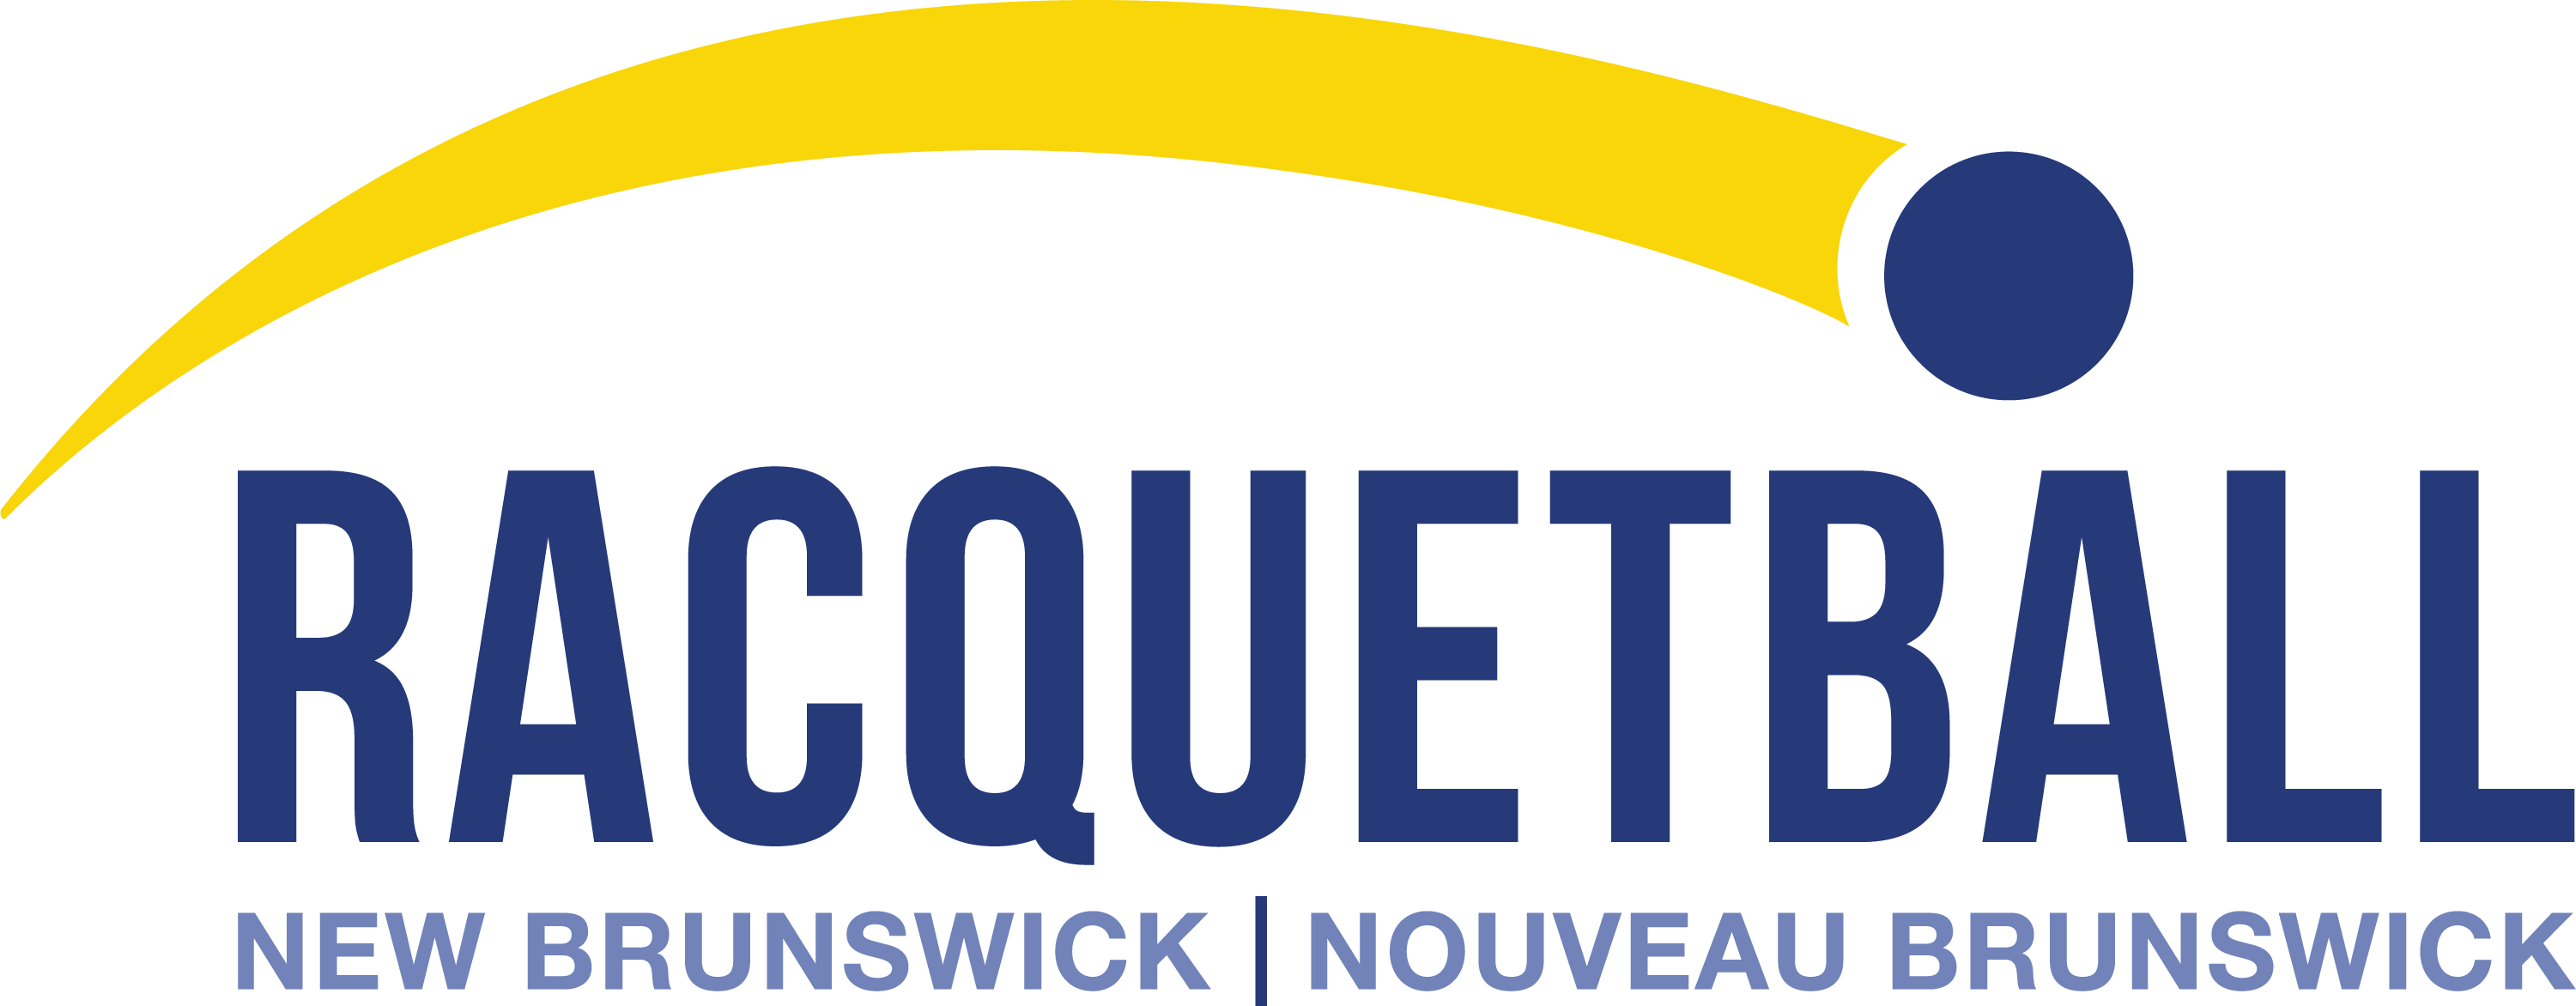 2022/23 Racquetball Nouveau-Brunswick - Inscription individuelle